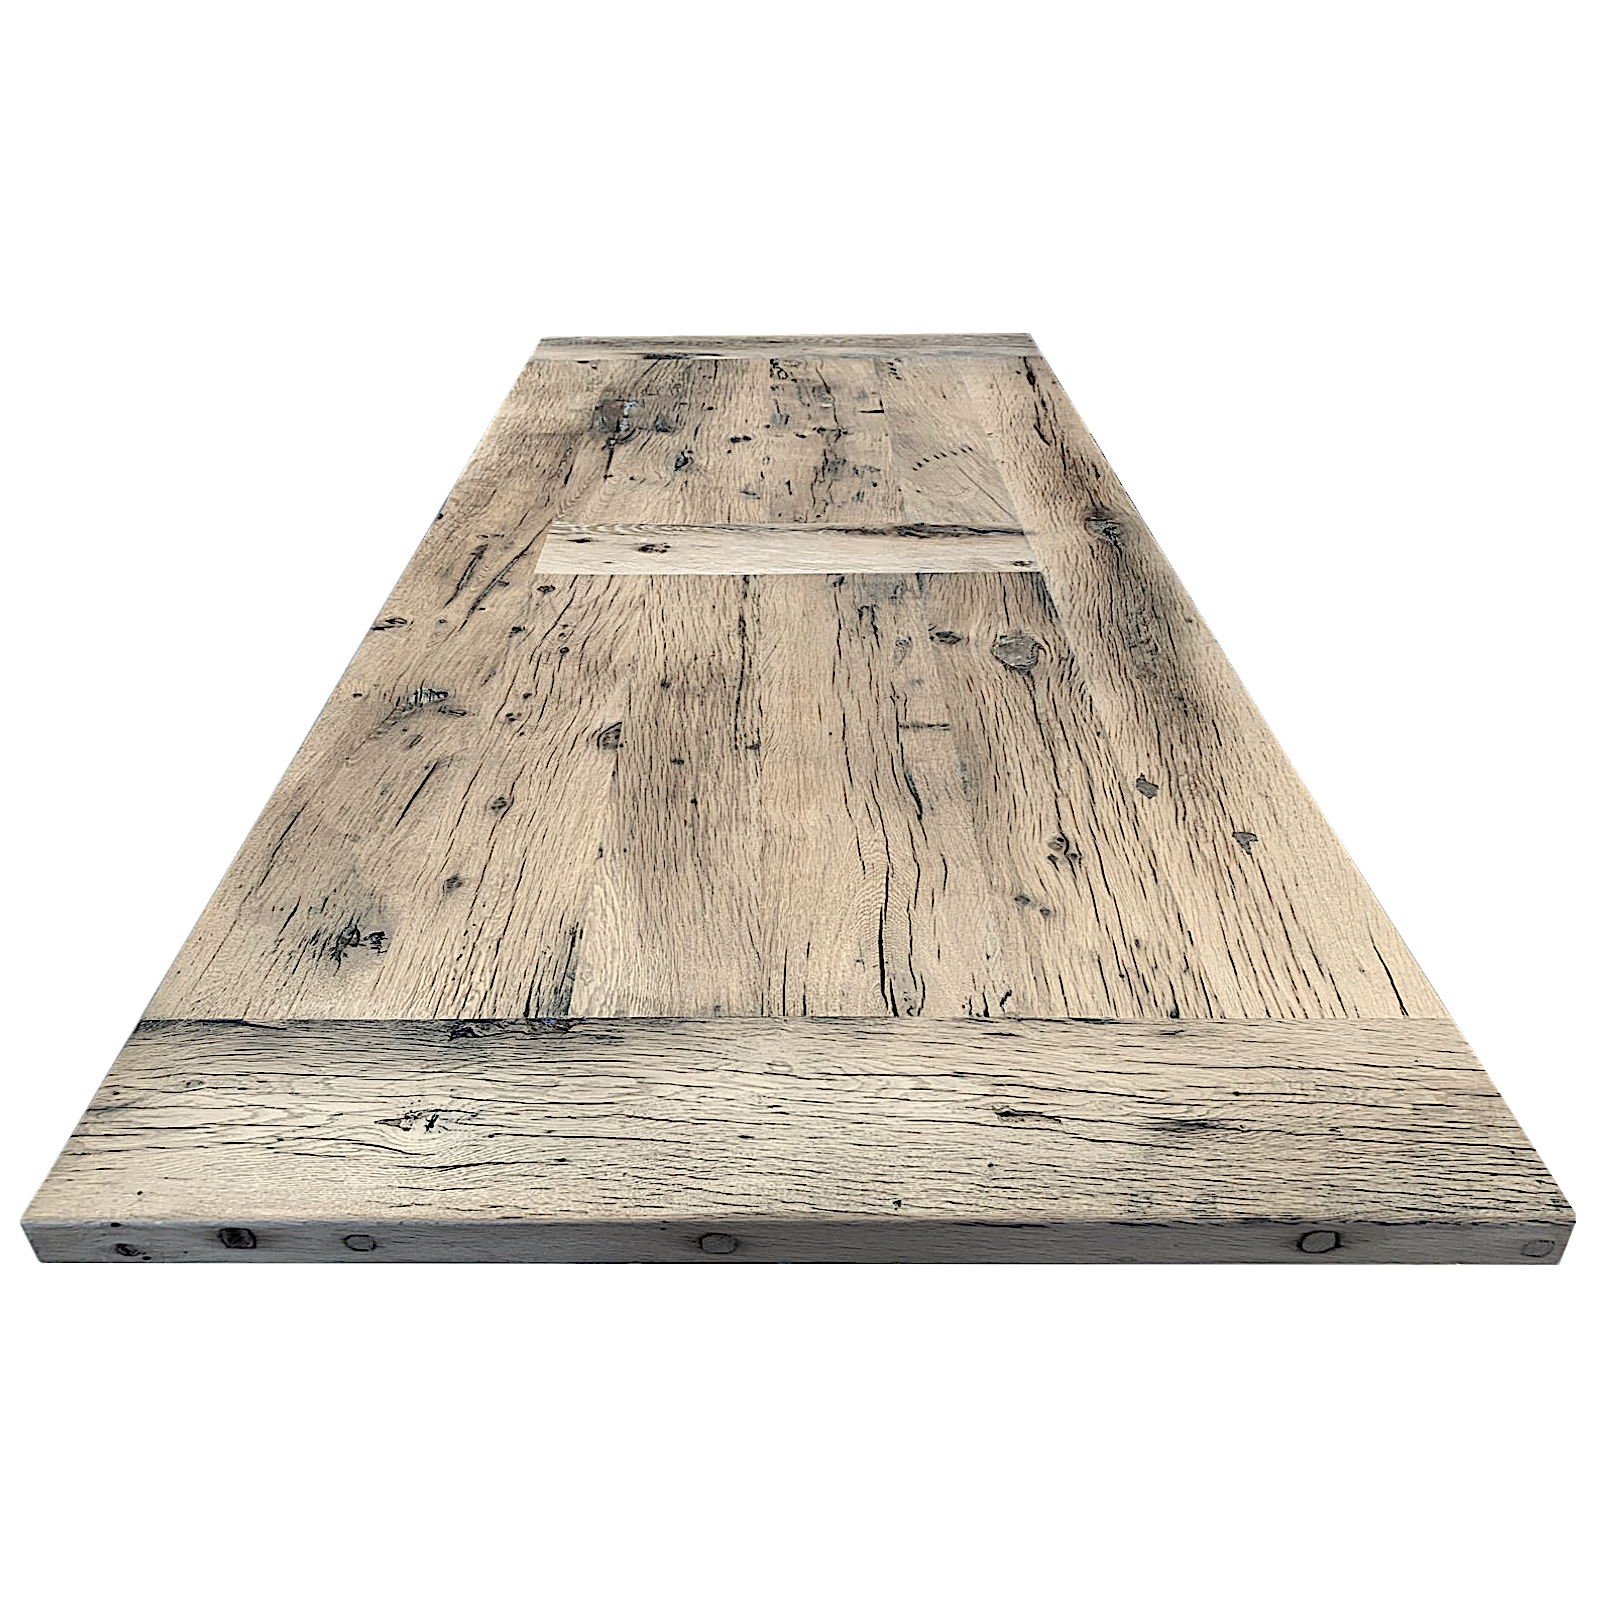  Rustic oak table top 